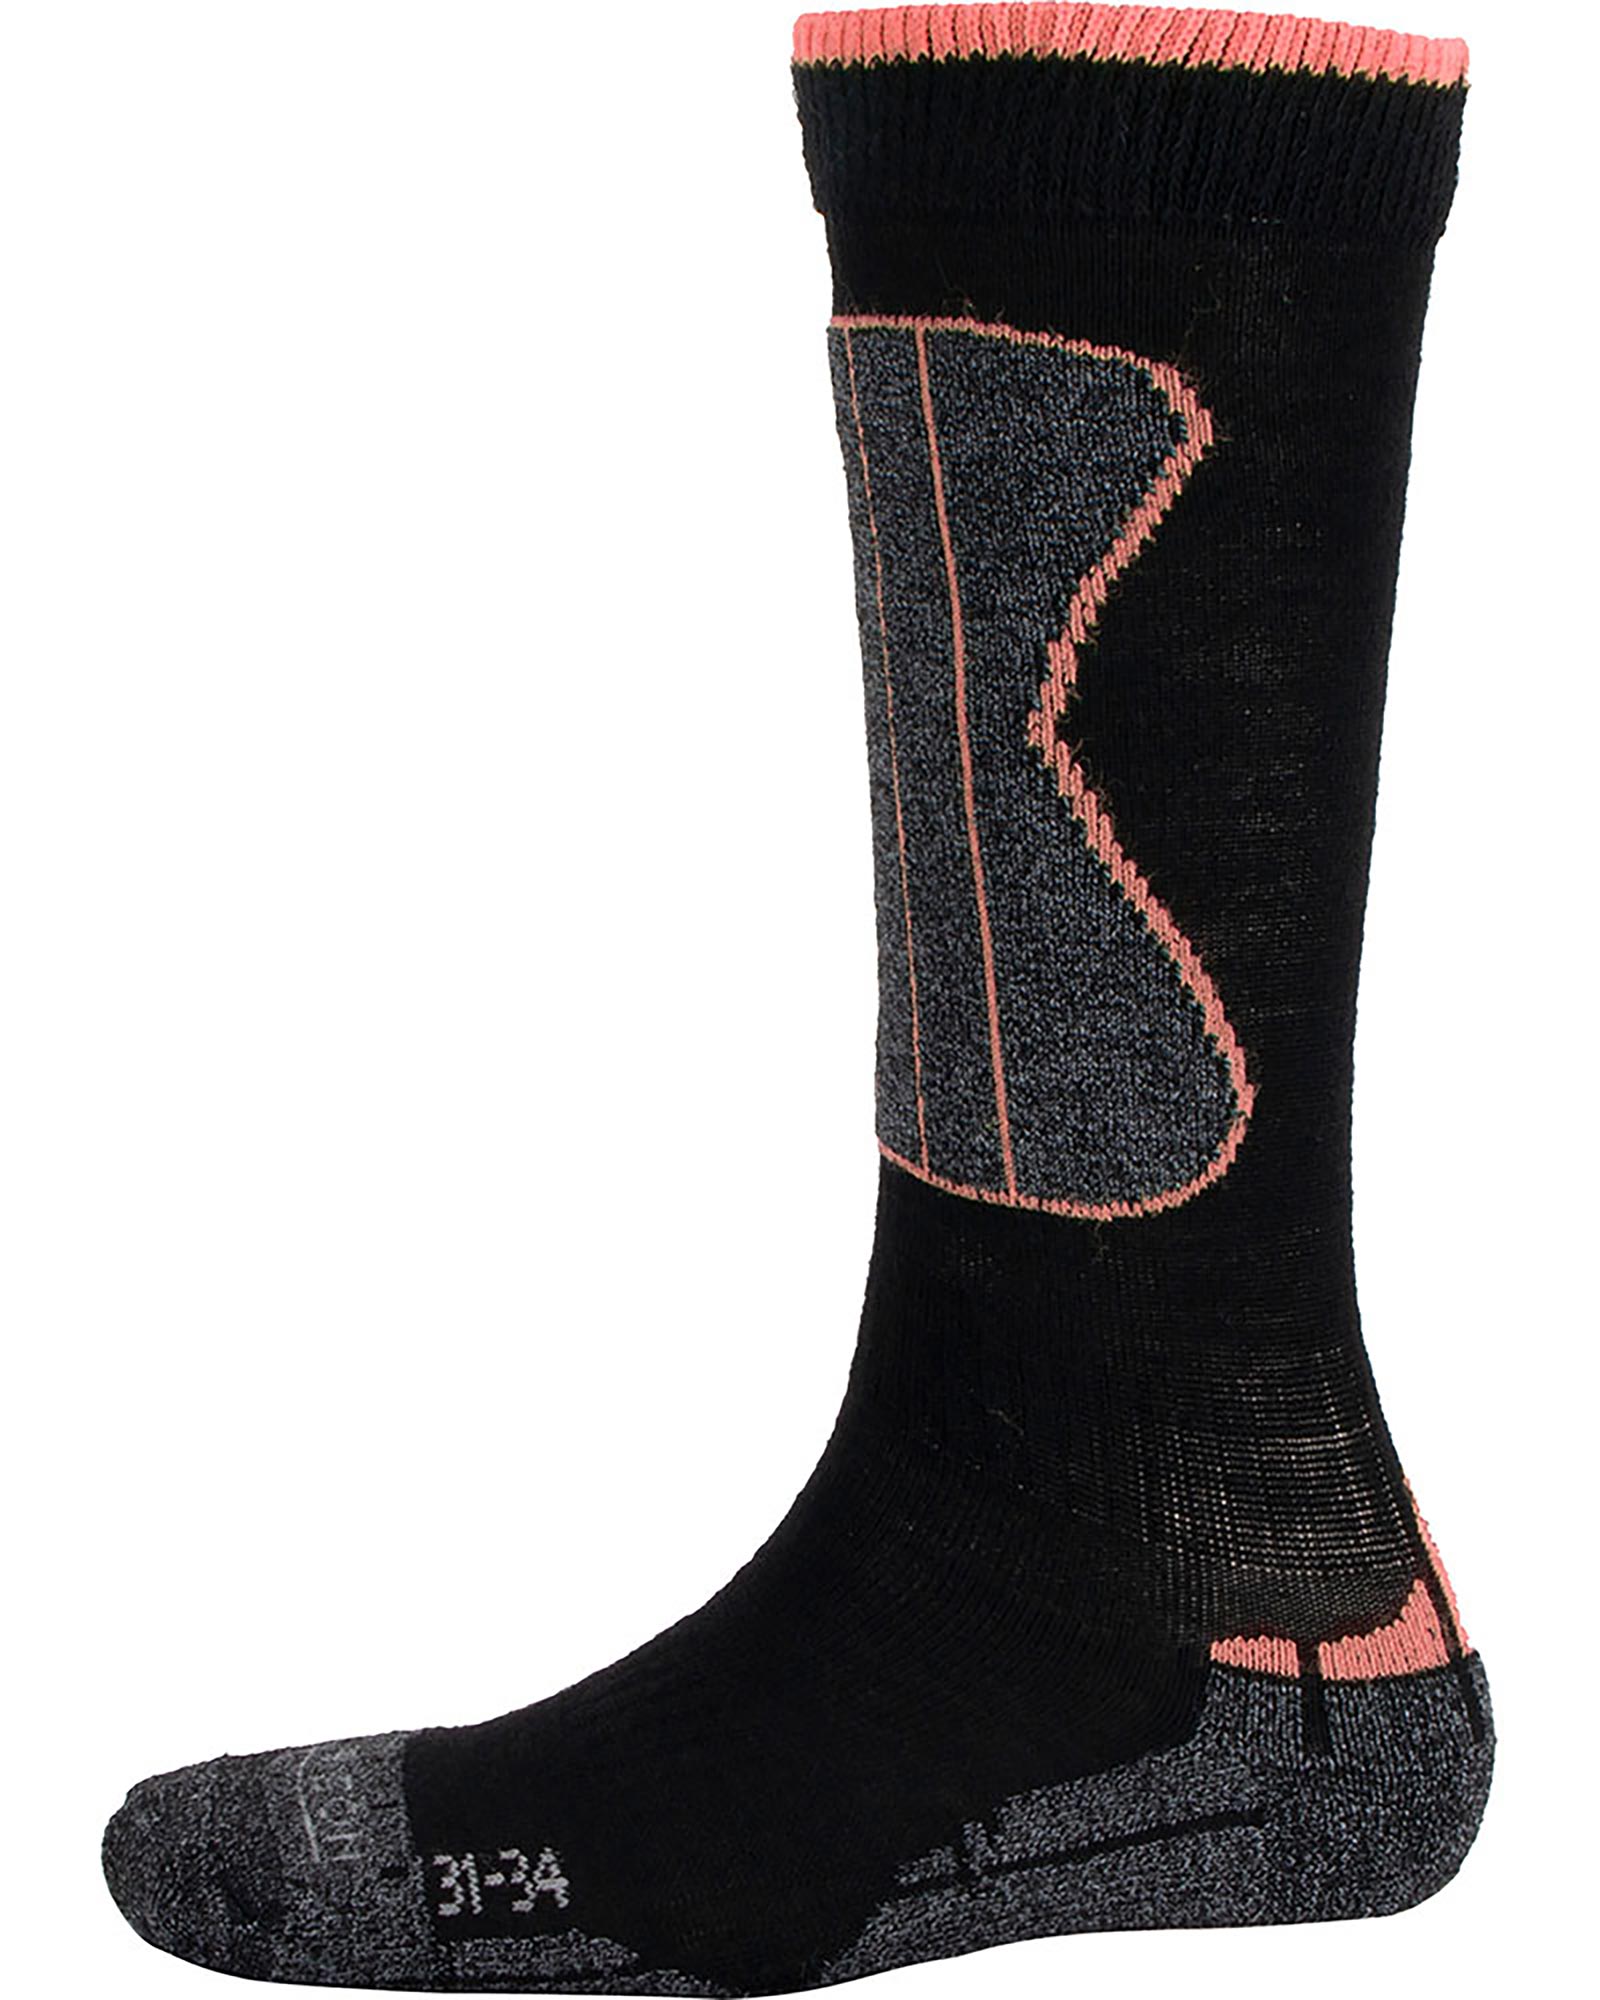 Ellis Brigham Wintersport Kids’ Socks - Black/Cerise L